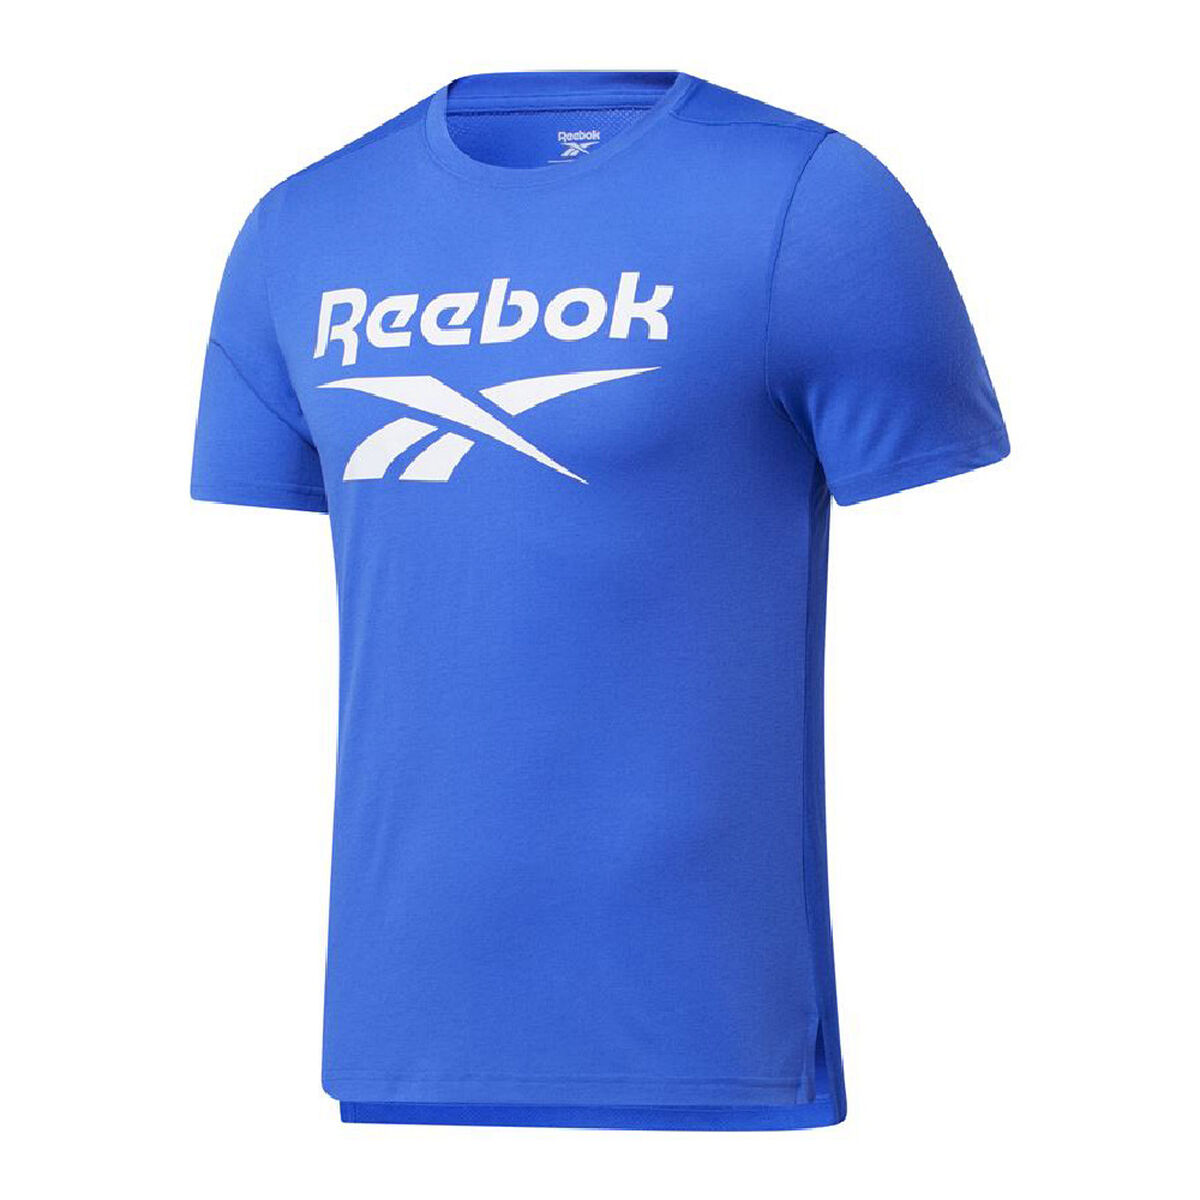 T-shirt à manches courtes homme Reebok Workout Ready Supremium Bleu